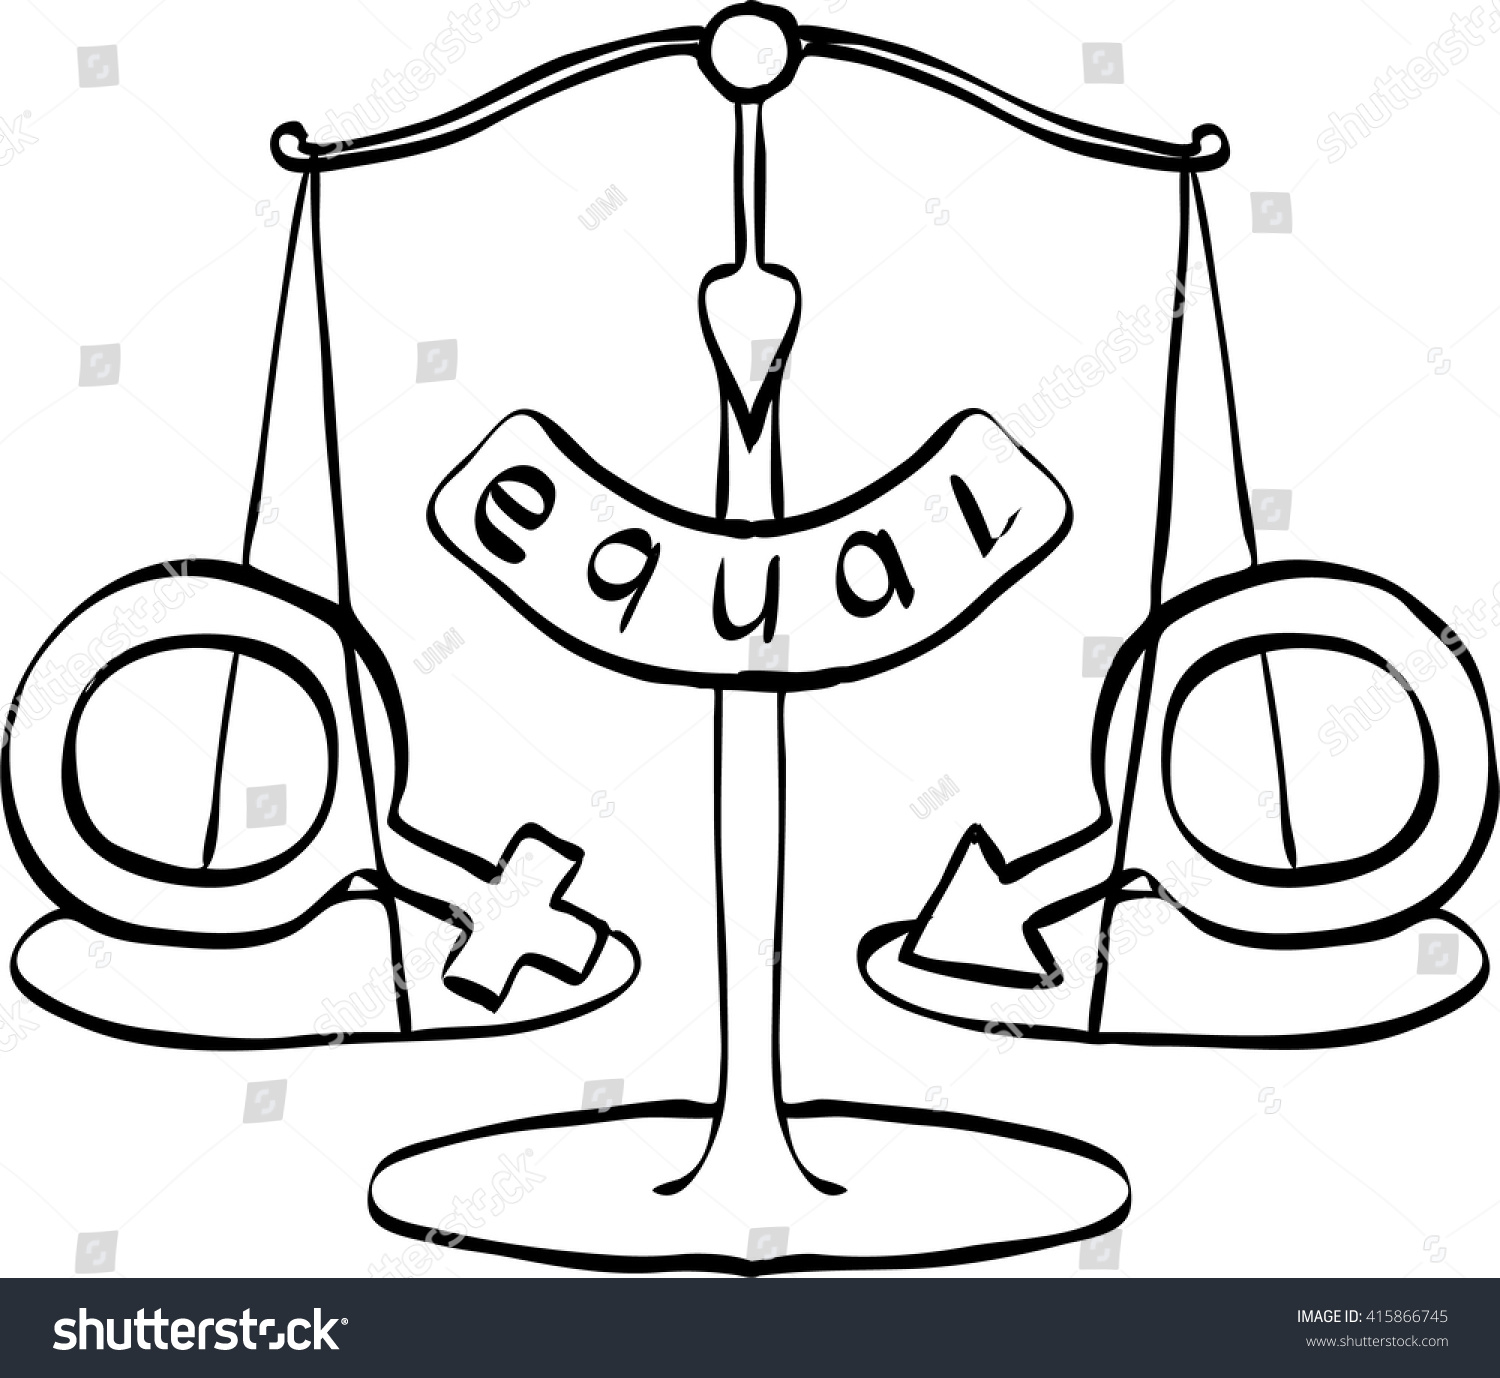 Vektor Stok Gender Equality Concept Sex Equality Vector Tanpa Royalti 415866745 Shutterstock 0265